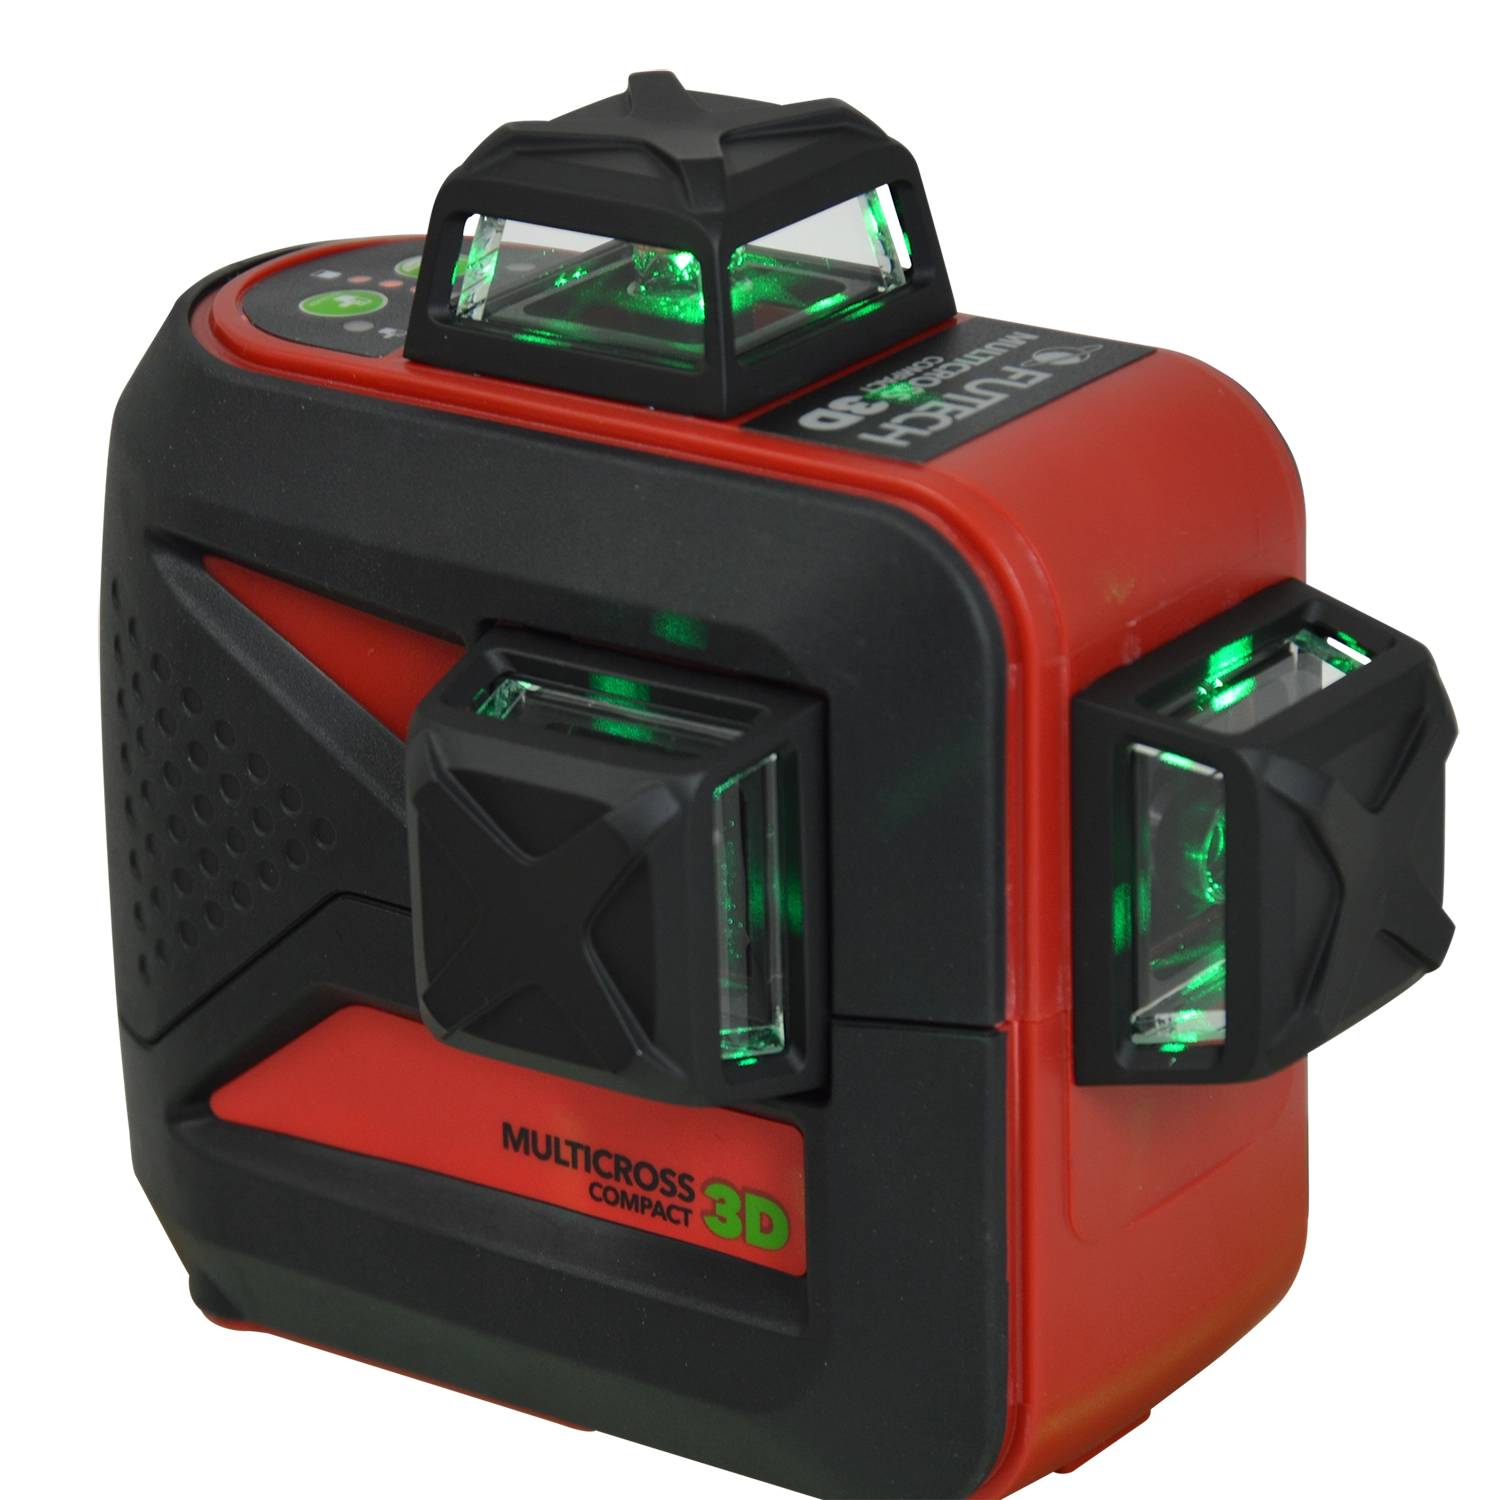 Laser croix MC3D compact vert - 040.03D